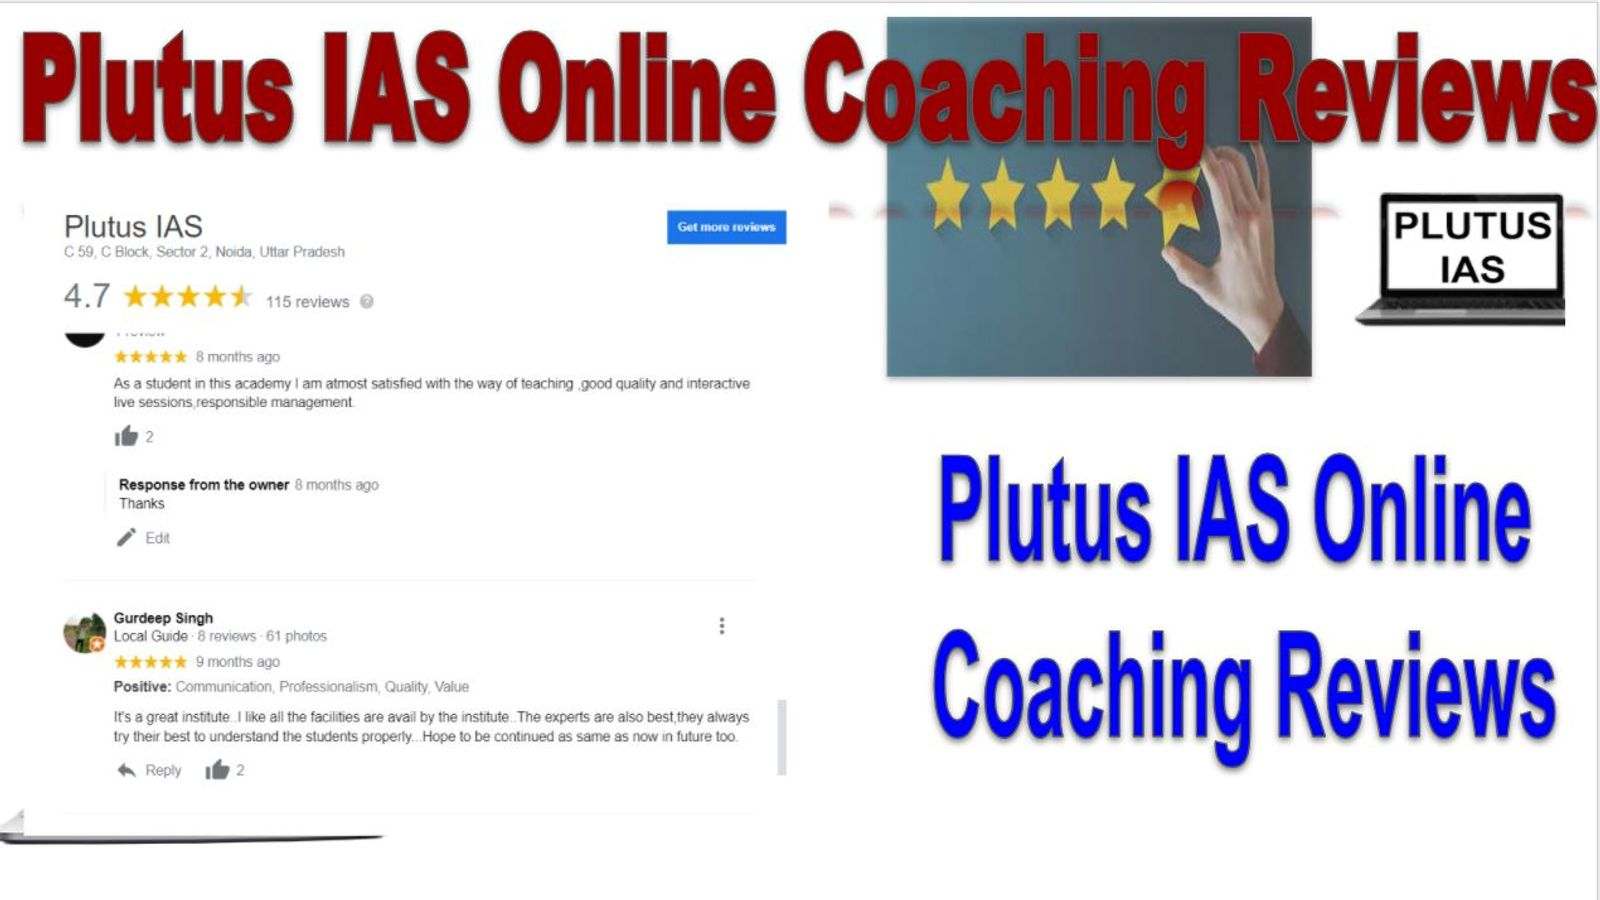 Review of Plutus IAS Online Coaching